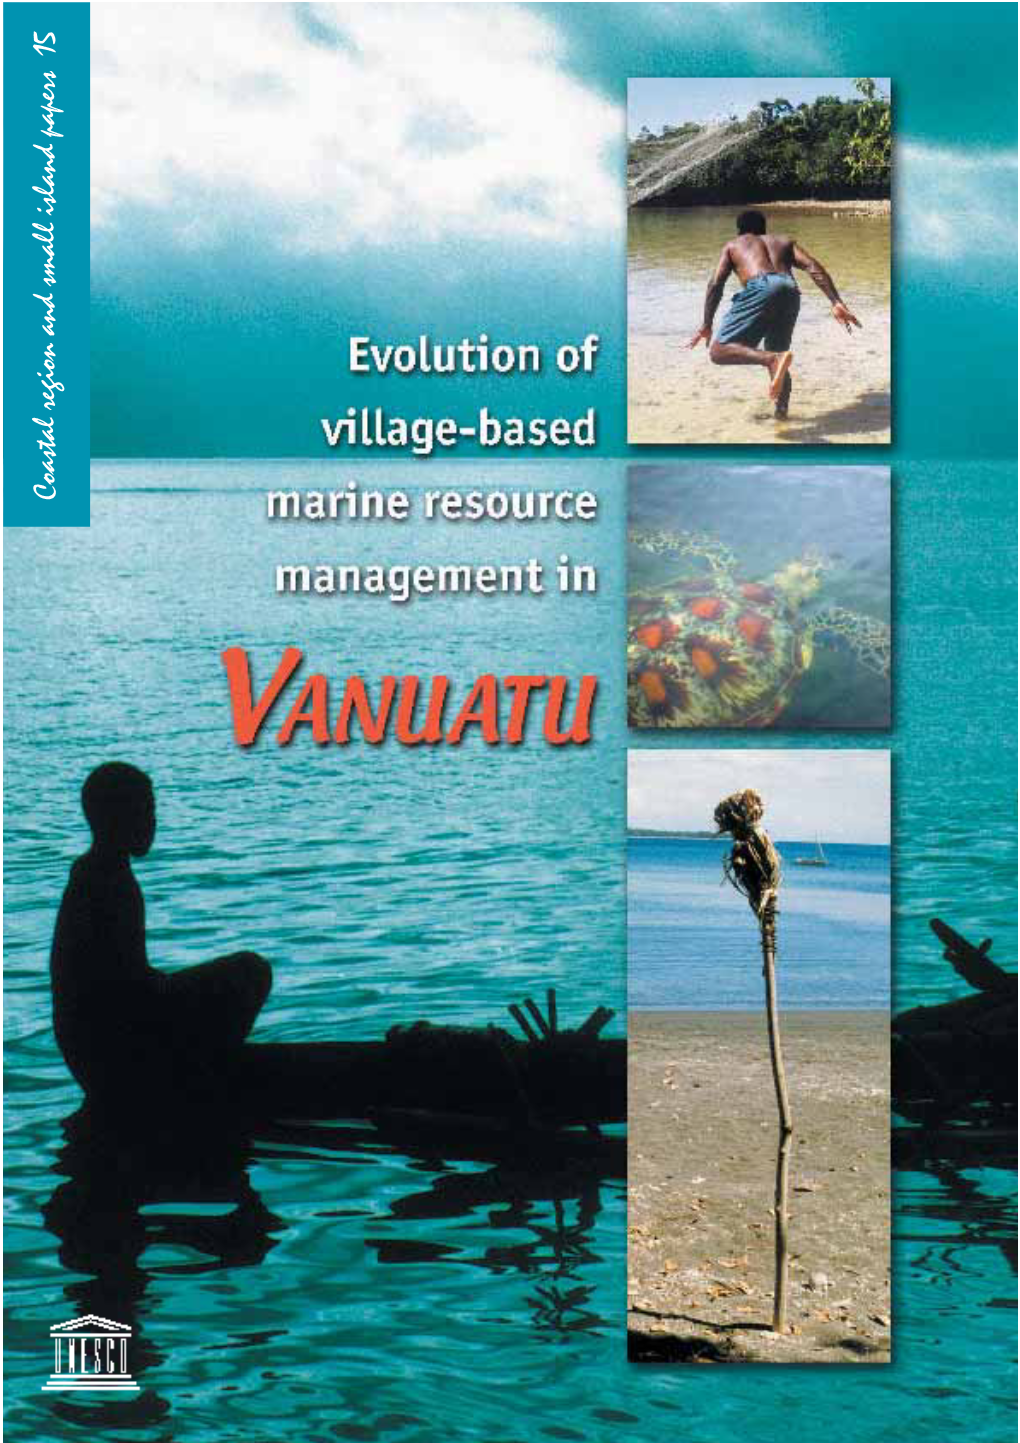 Evolution of Village-Based Marine Resource Management in VANUATU Between 1993 and 2001